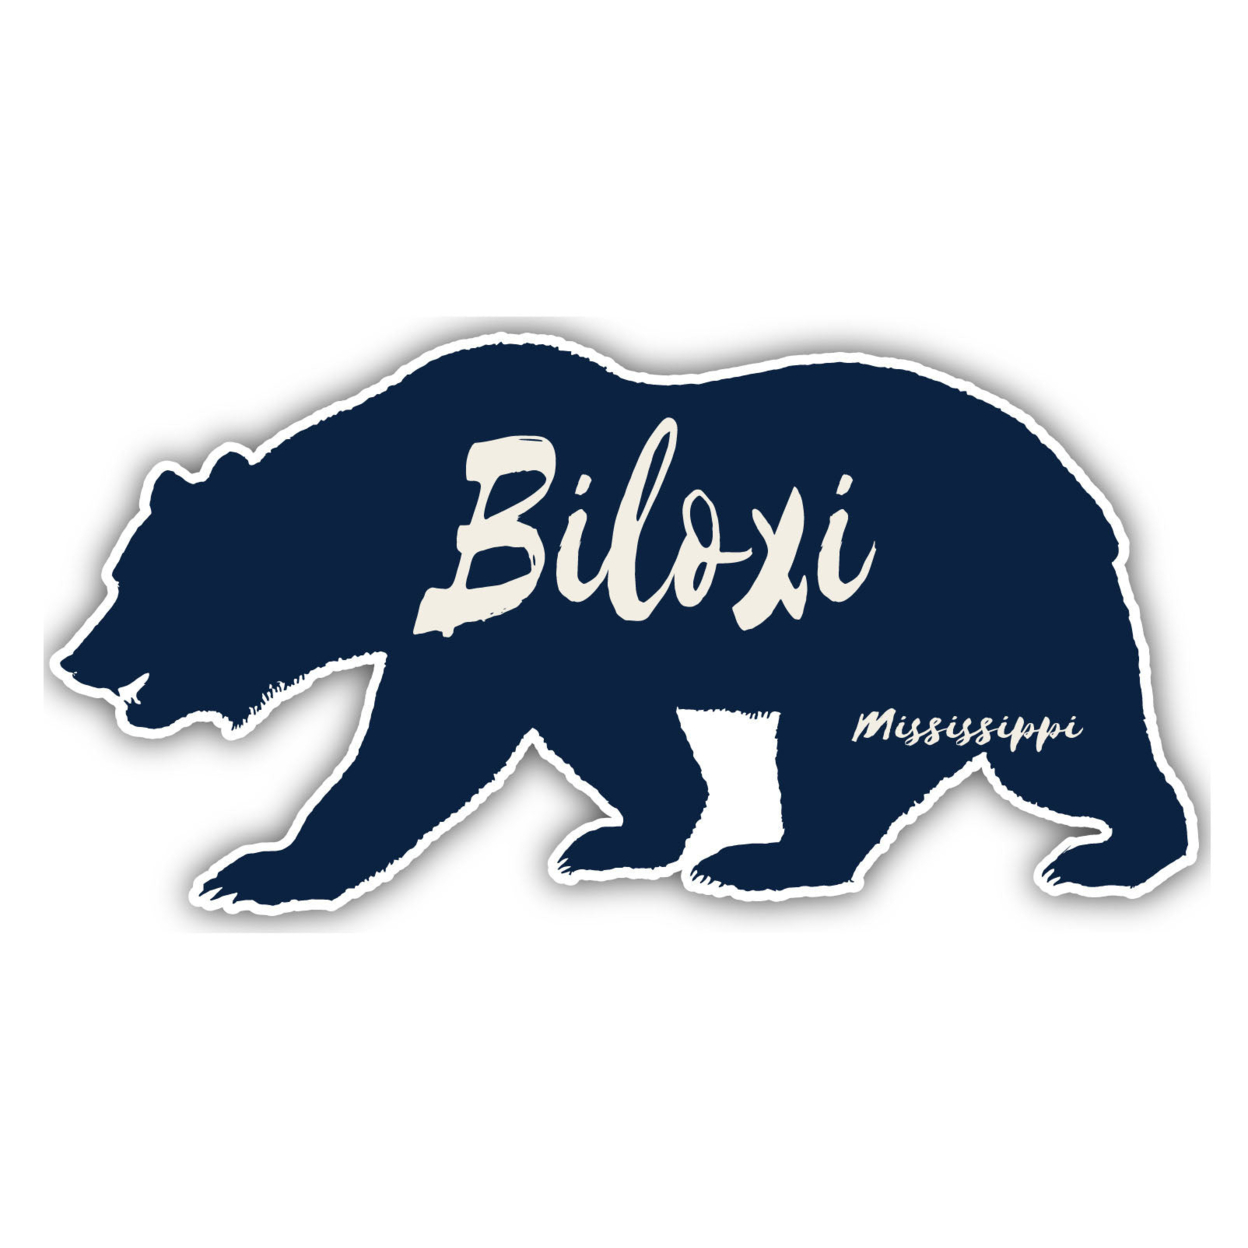 Biloxi Mississippi Souvenir Decorative Stickers (Choose Theme And Size) - Single Unit, 4-Inch, Tent